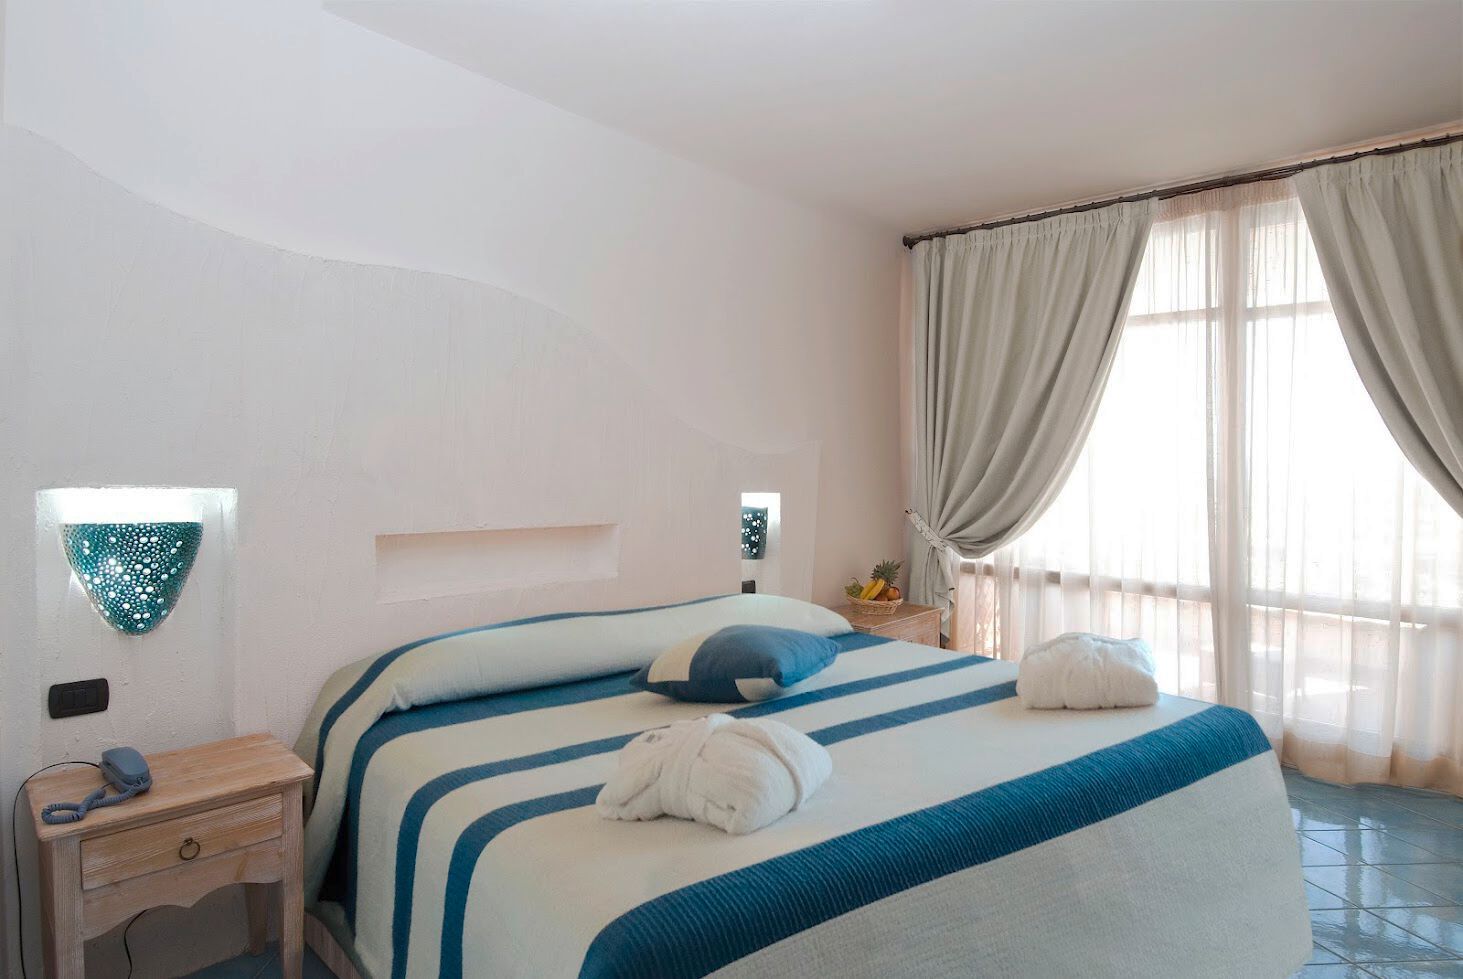 Italie - Sardaigne - Hôtel Resort & Spa Baia Caddinas 4*